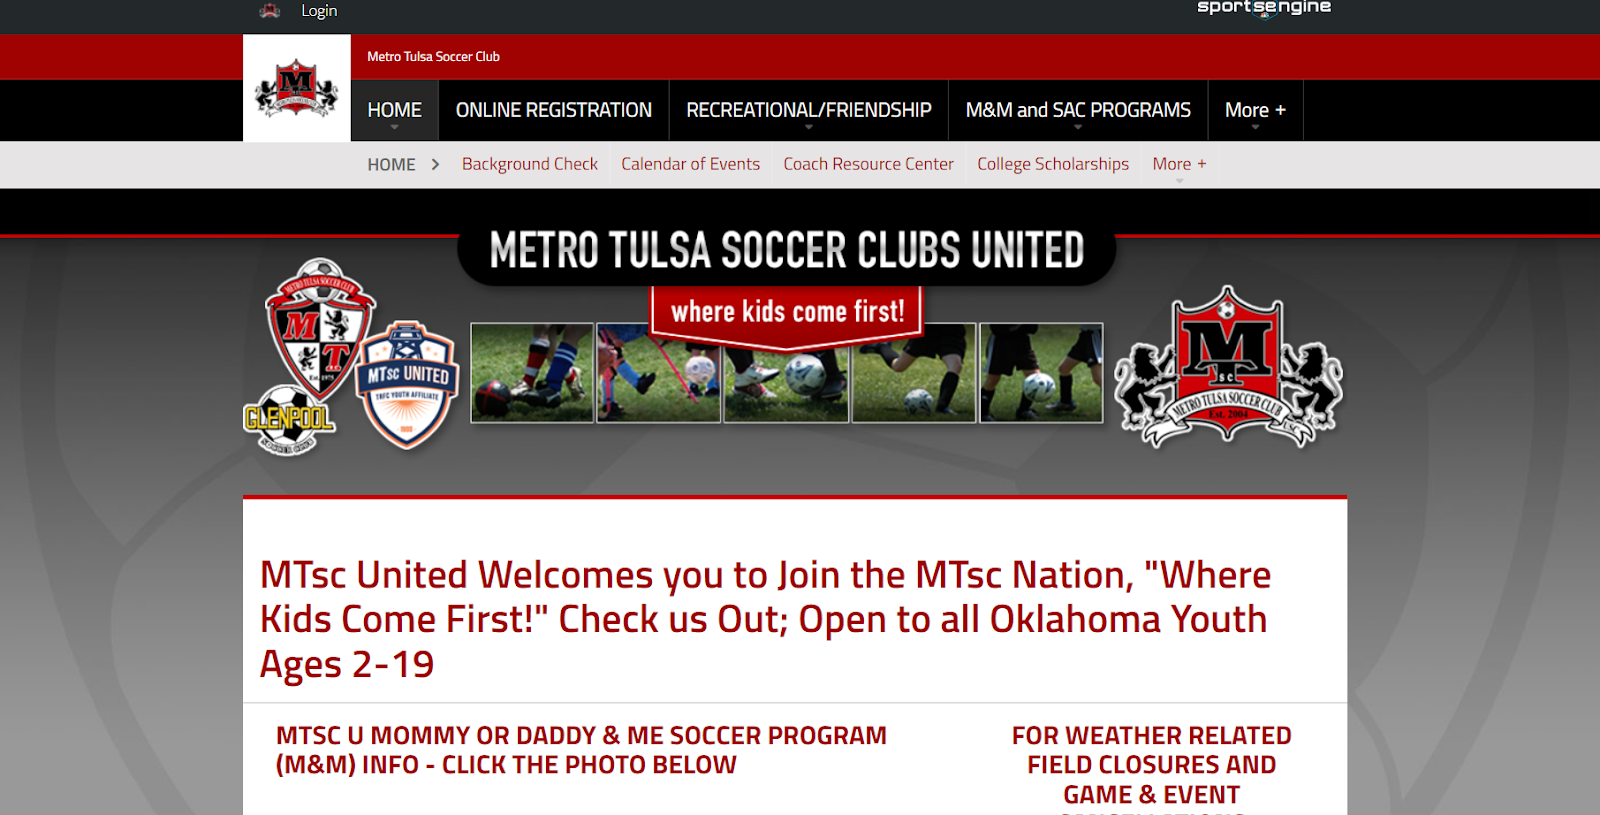 Metro Tulsa Soccer Club